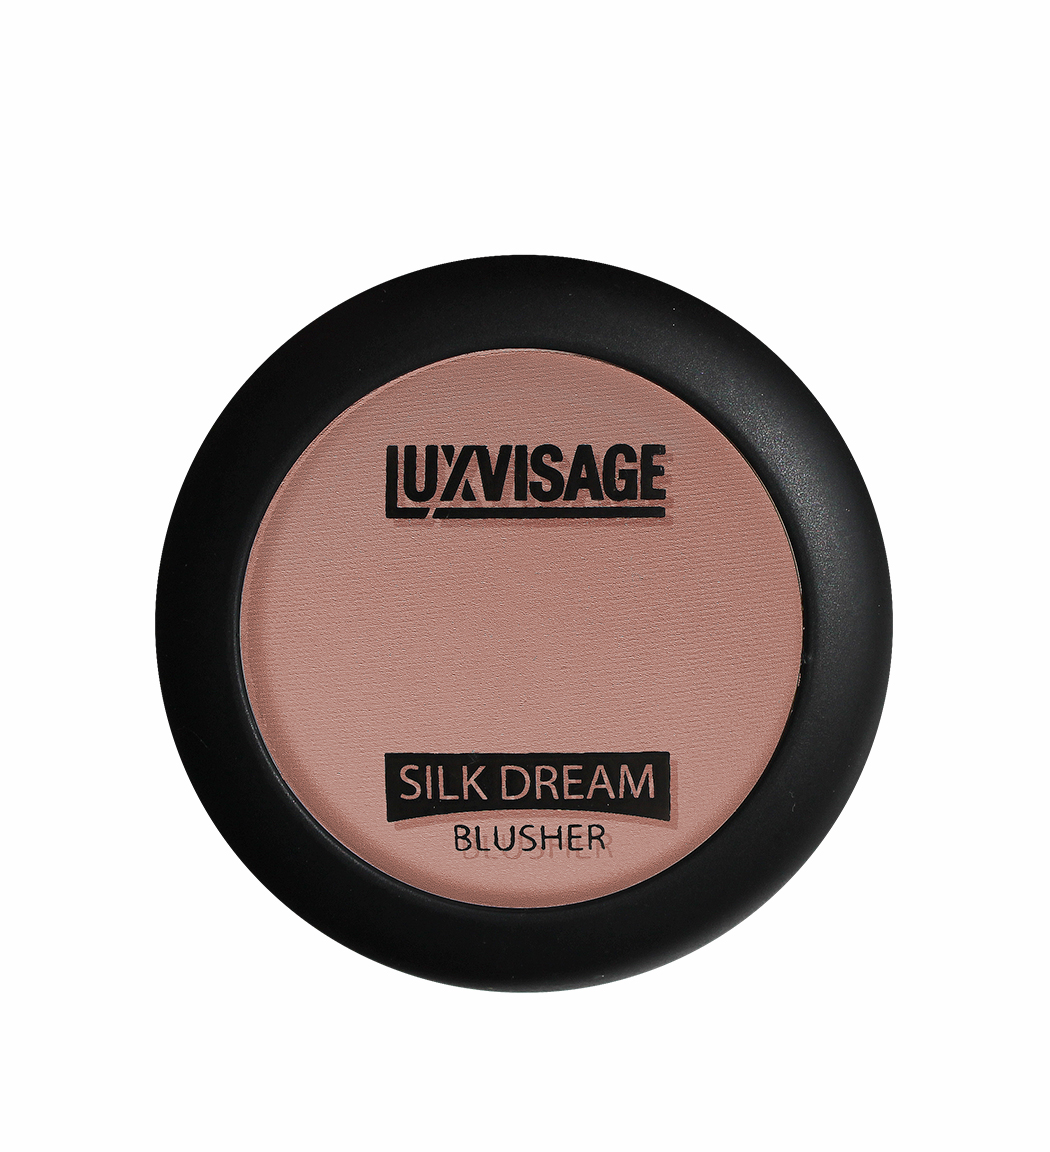 Luxvisage Шелковистые румяна Silk Dream, 5 г (Luxvisage, Лицо) цена и фото